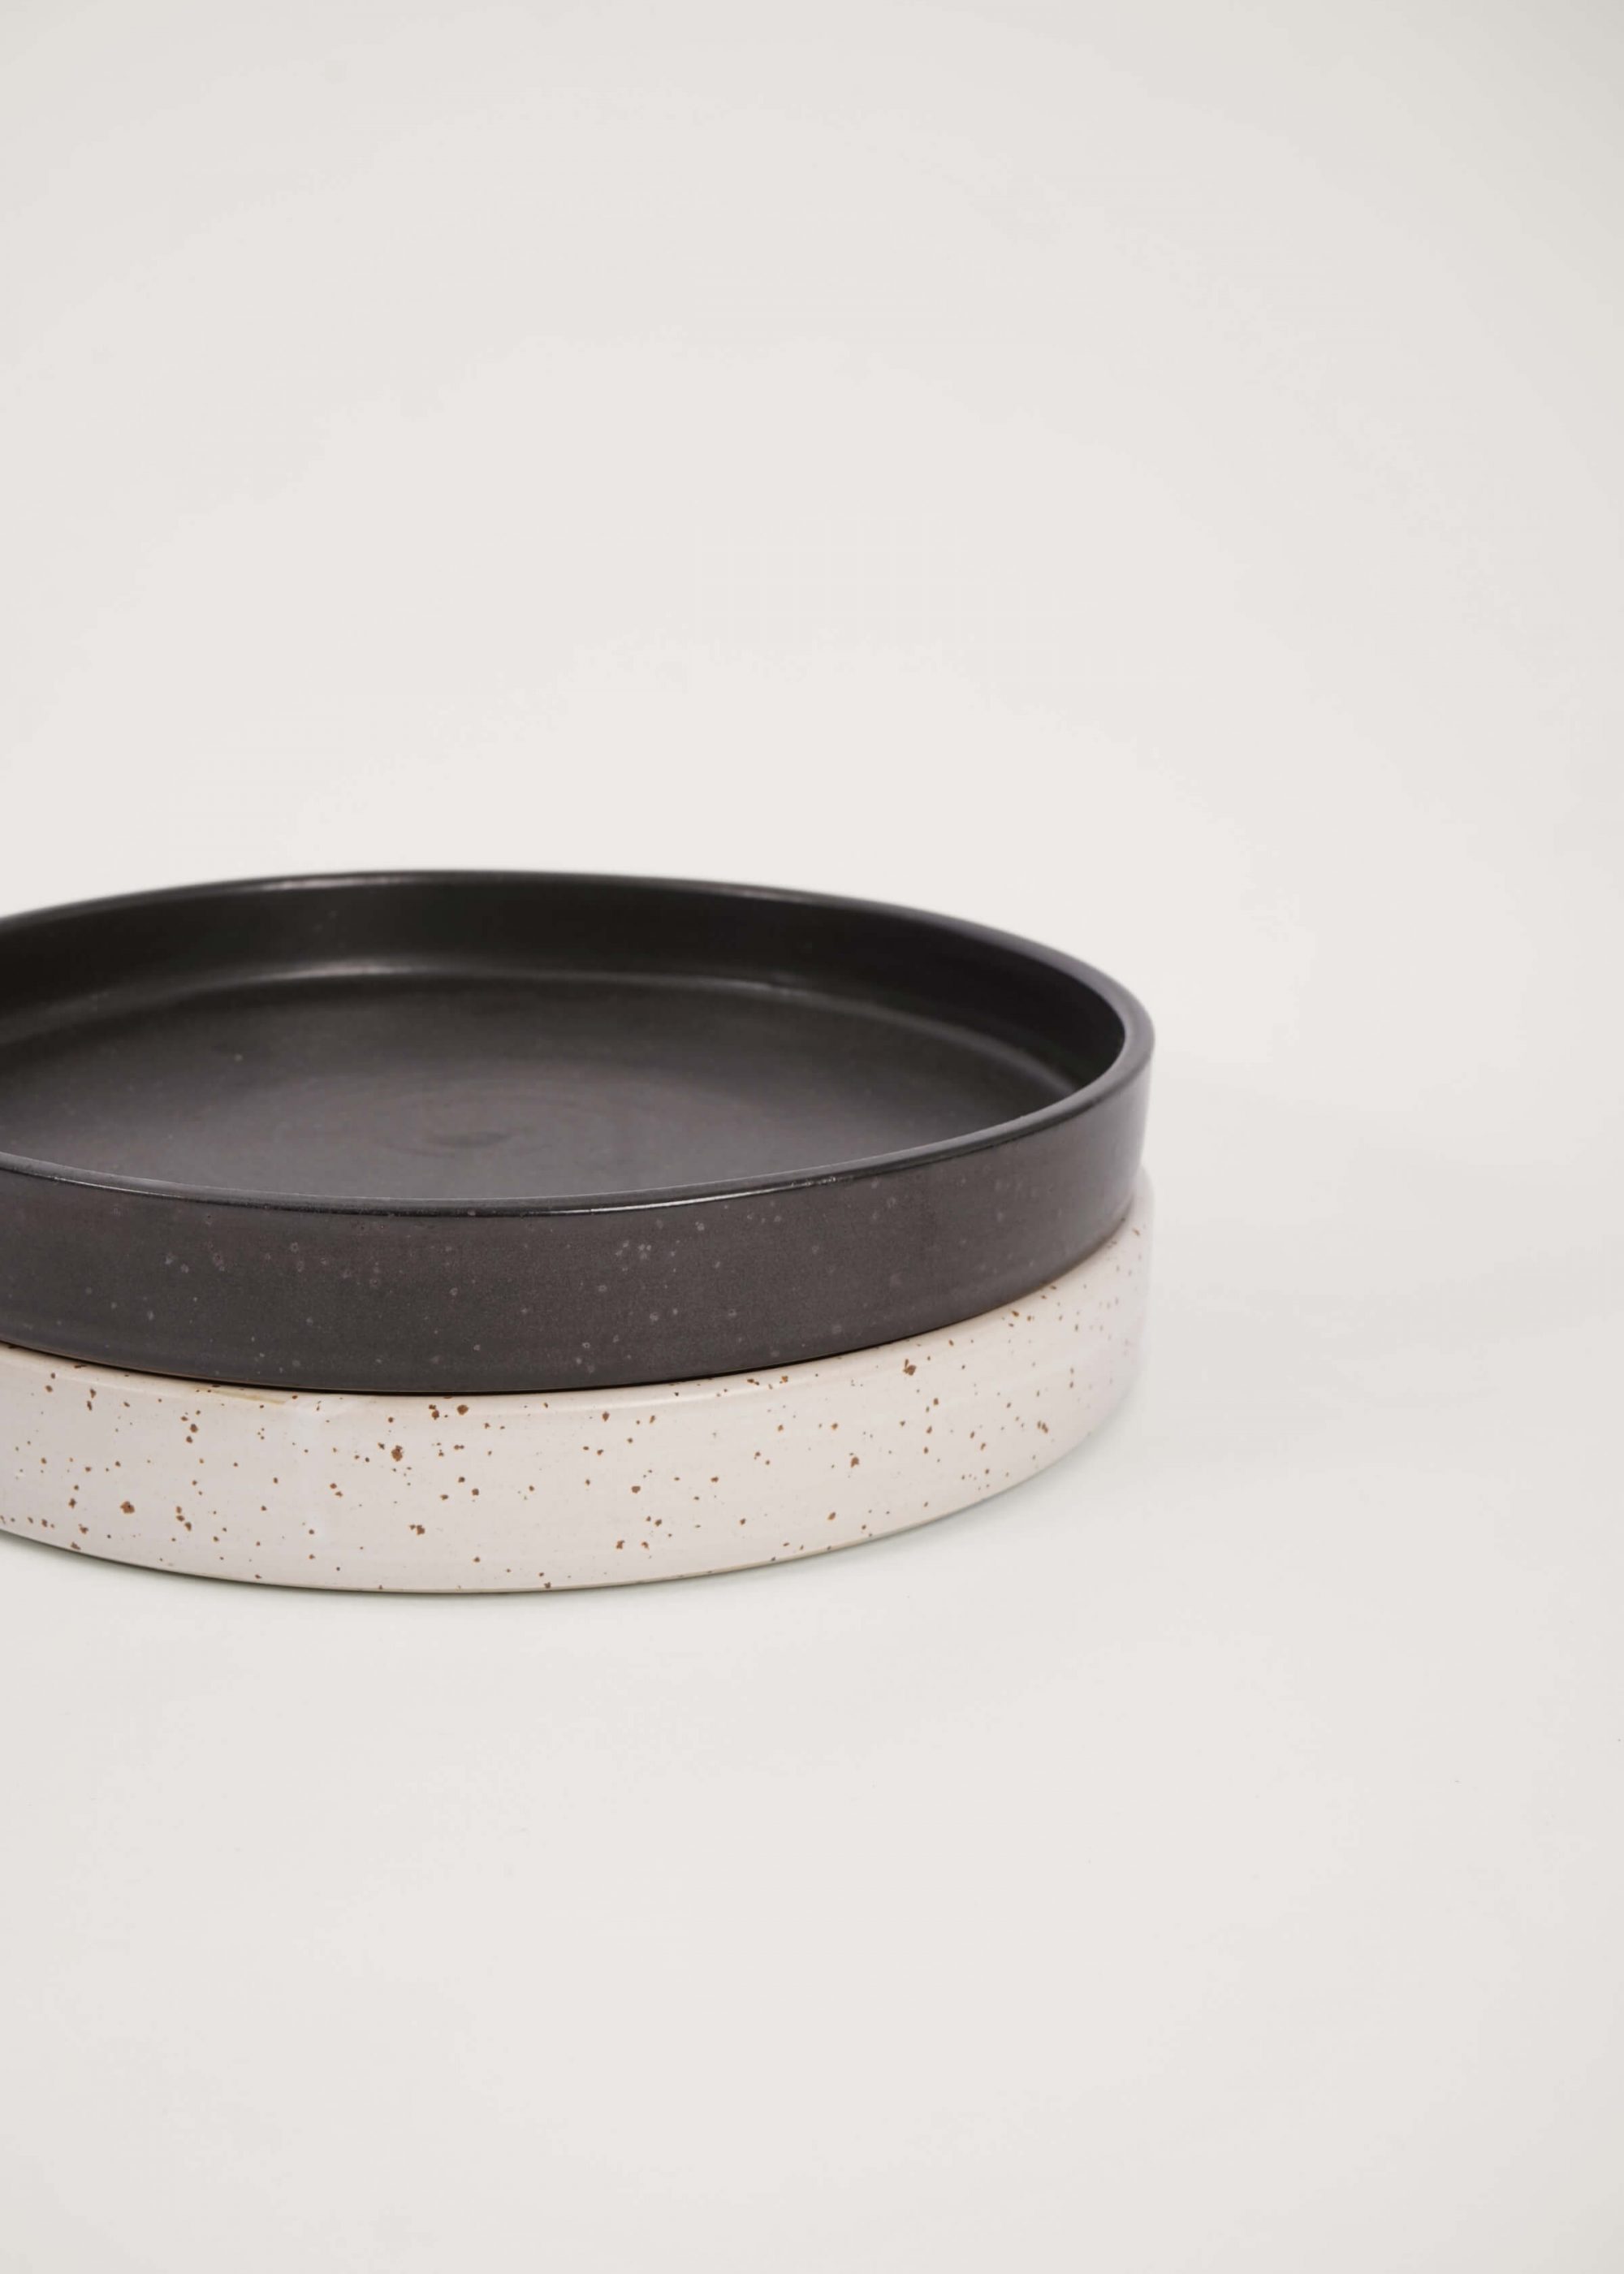 Product image for »Geodesic Black« Large Tray Plate Ménage | Genuine Stoneware Ceramic